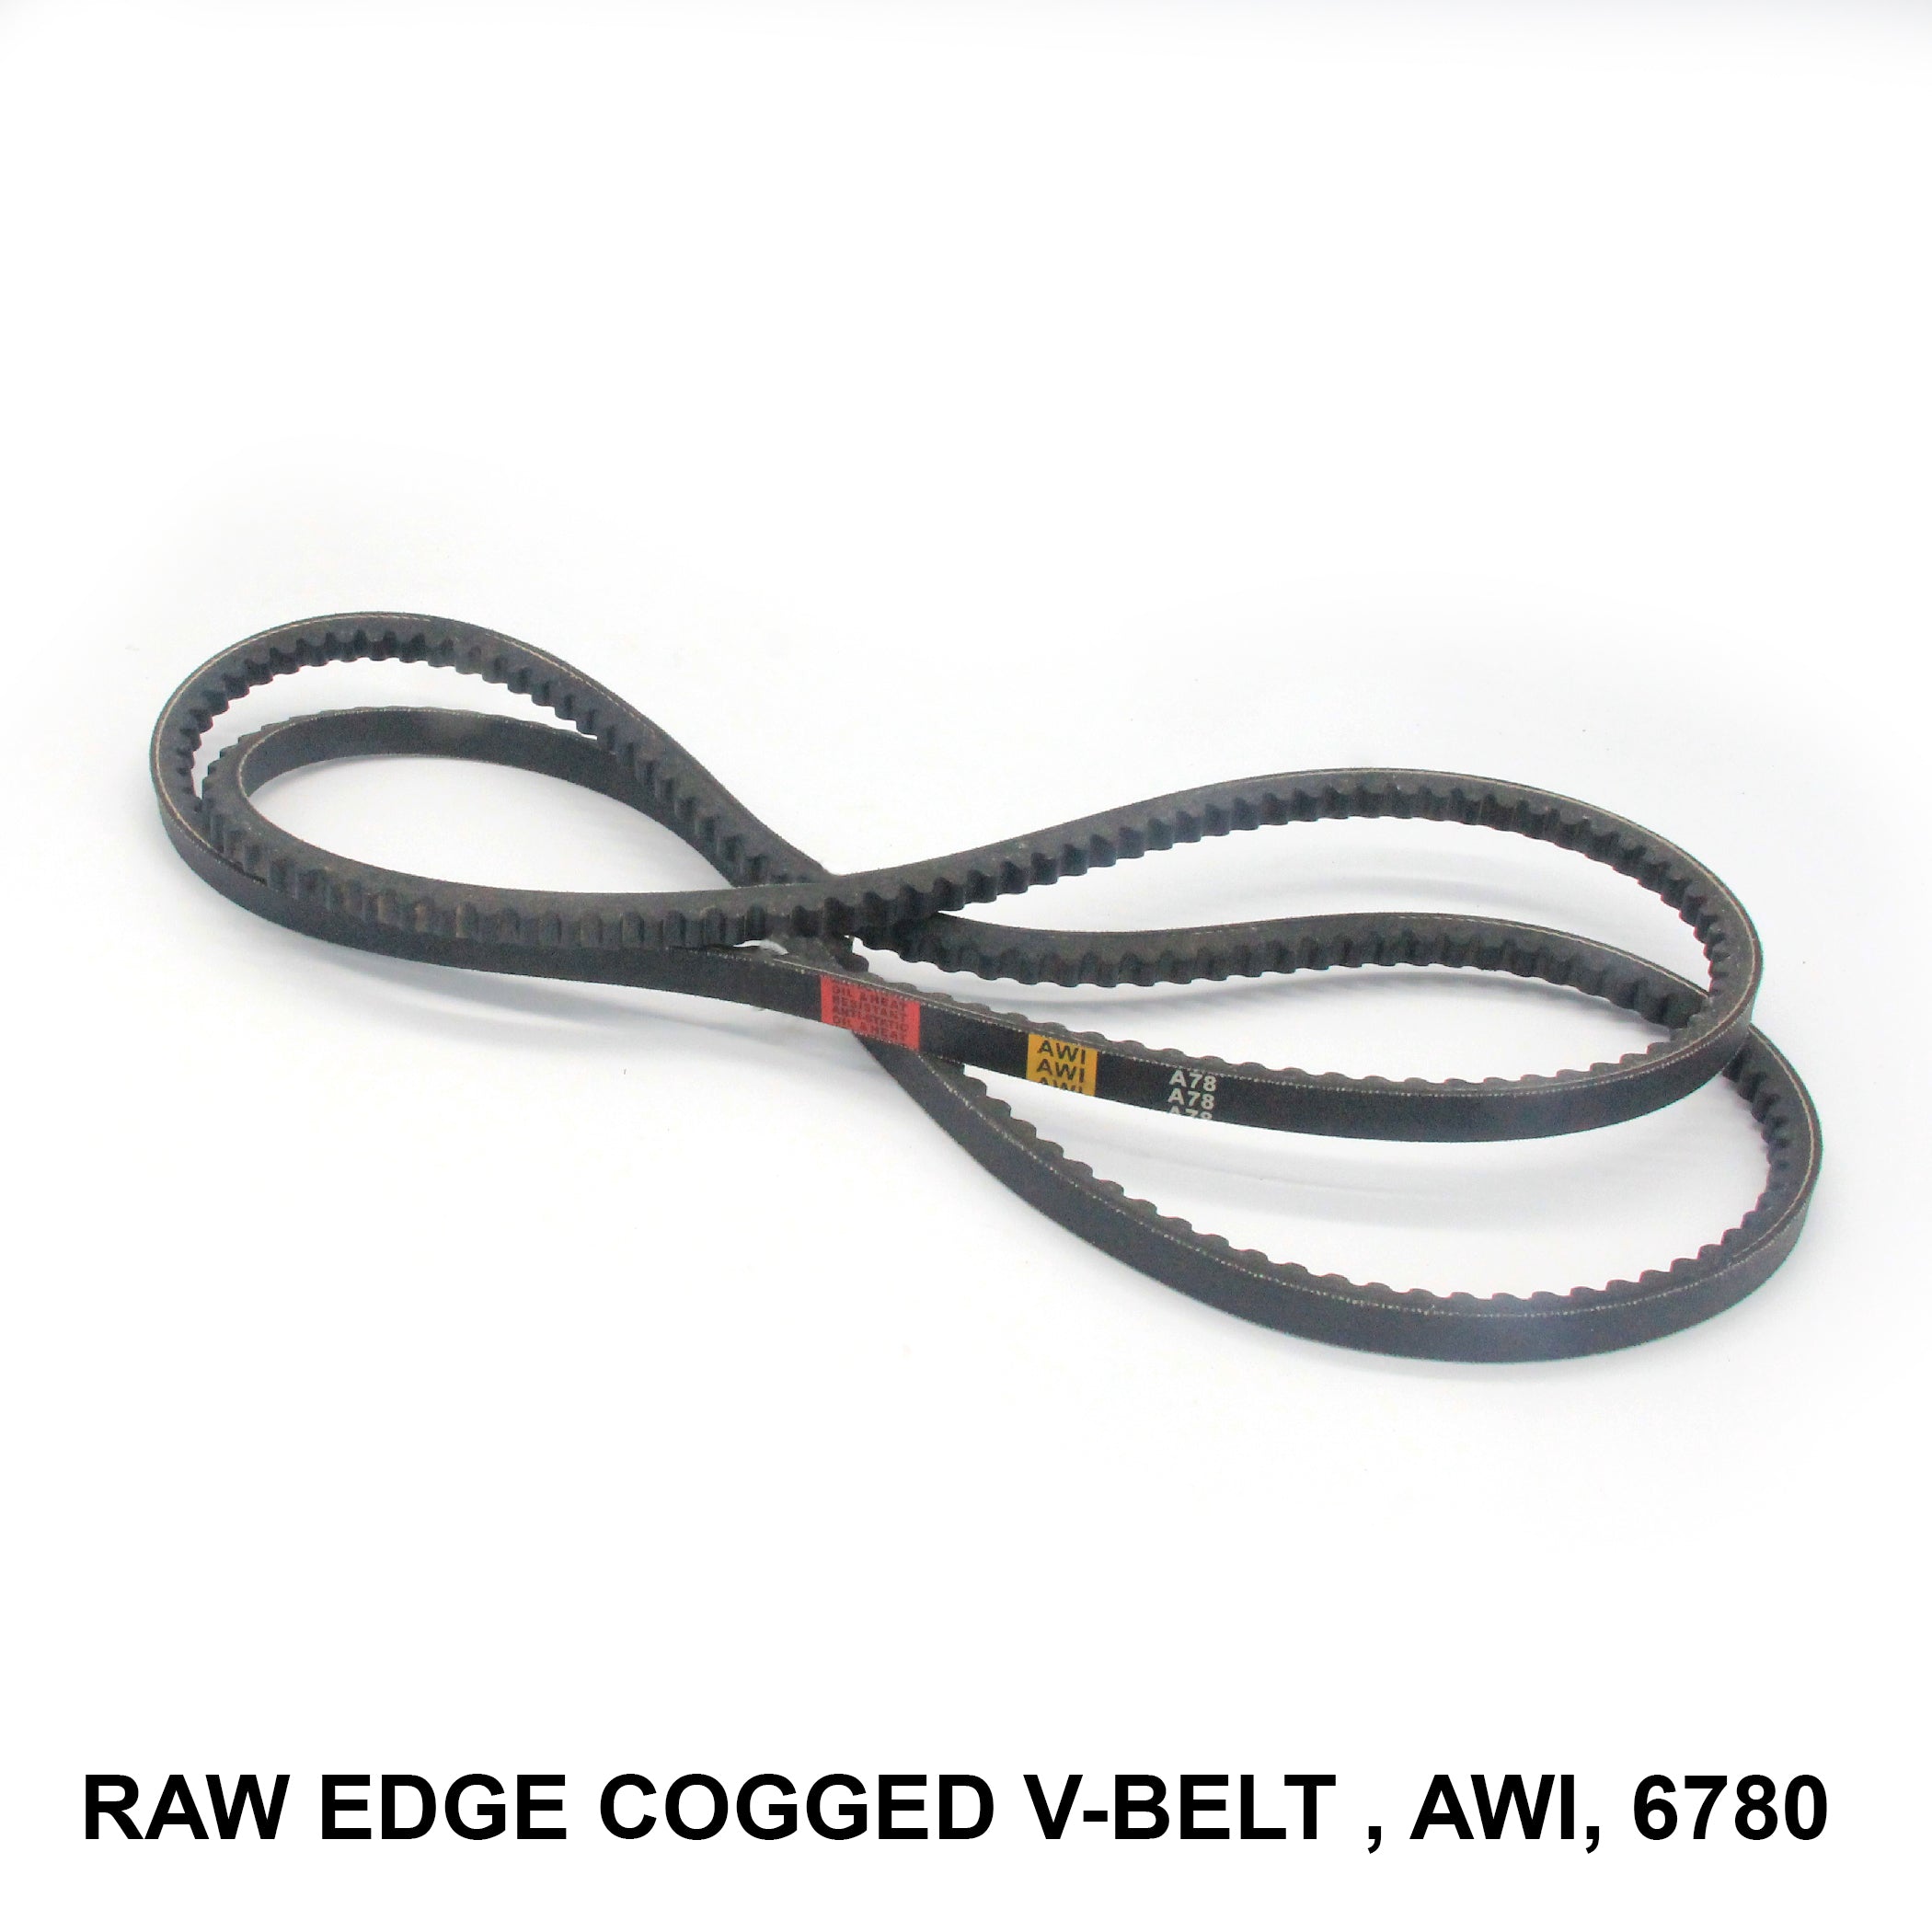 Raw Edge Cogged V-belt (RECMF), AWI, RECMF-6780